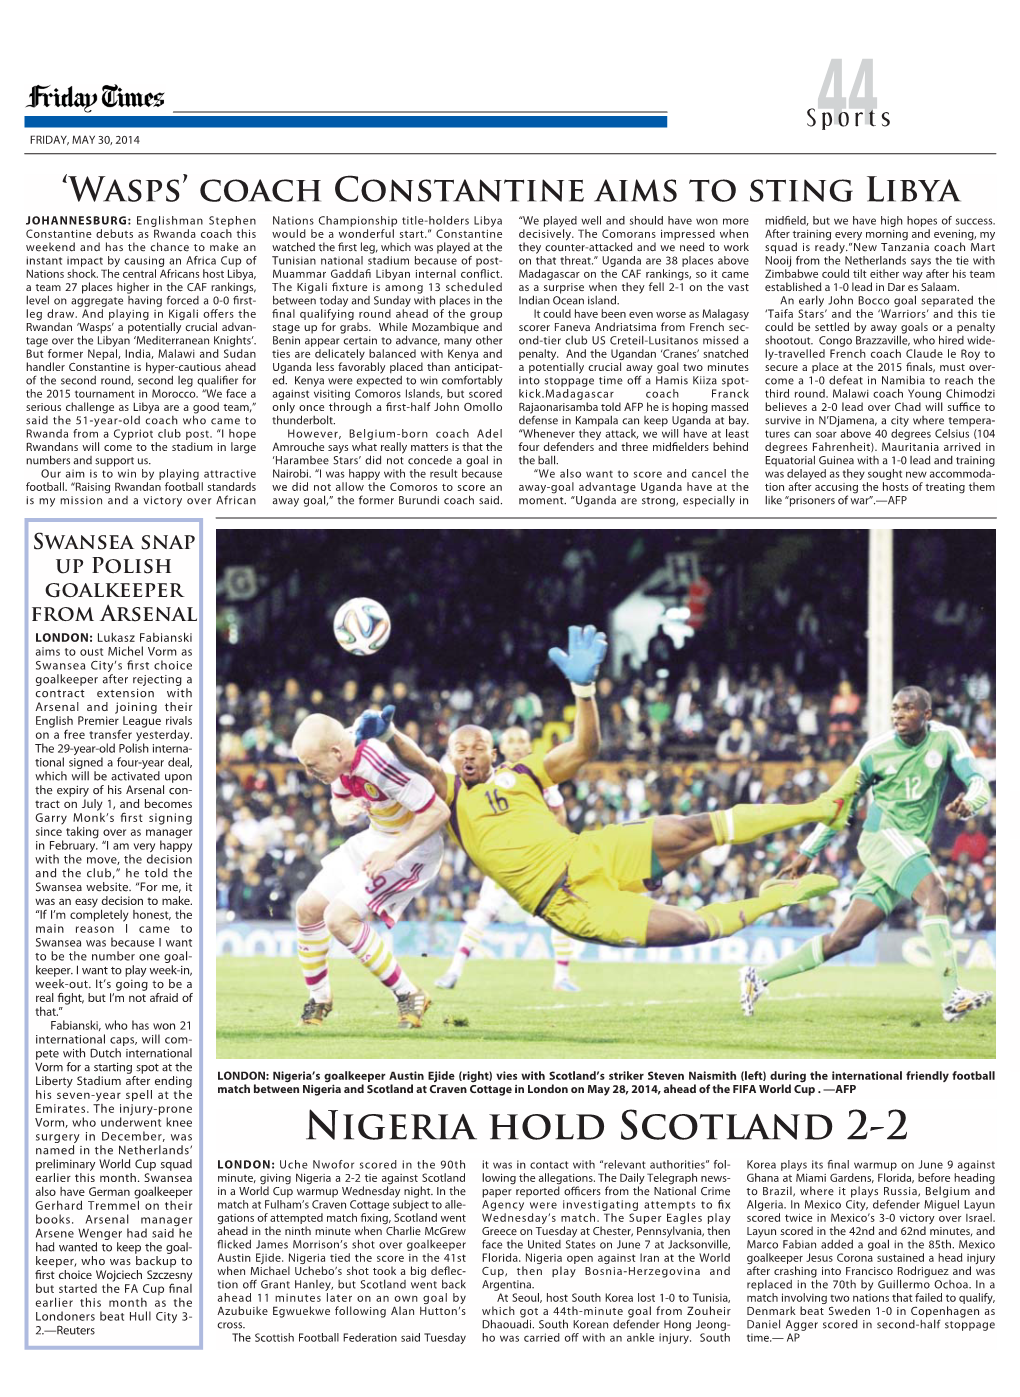 Nigeria Hold Scotland